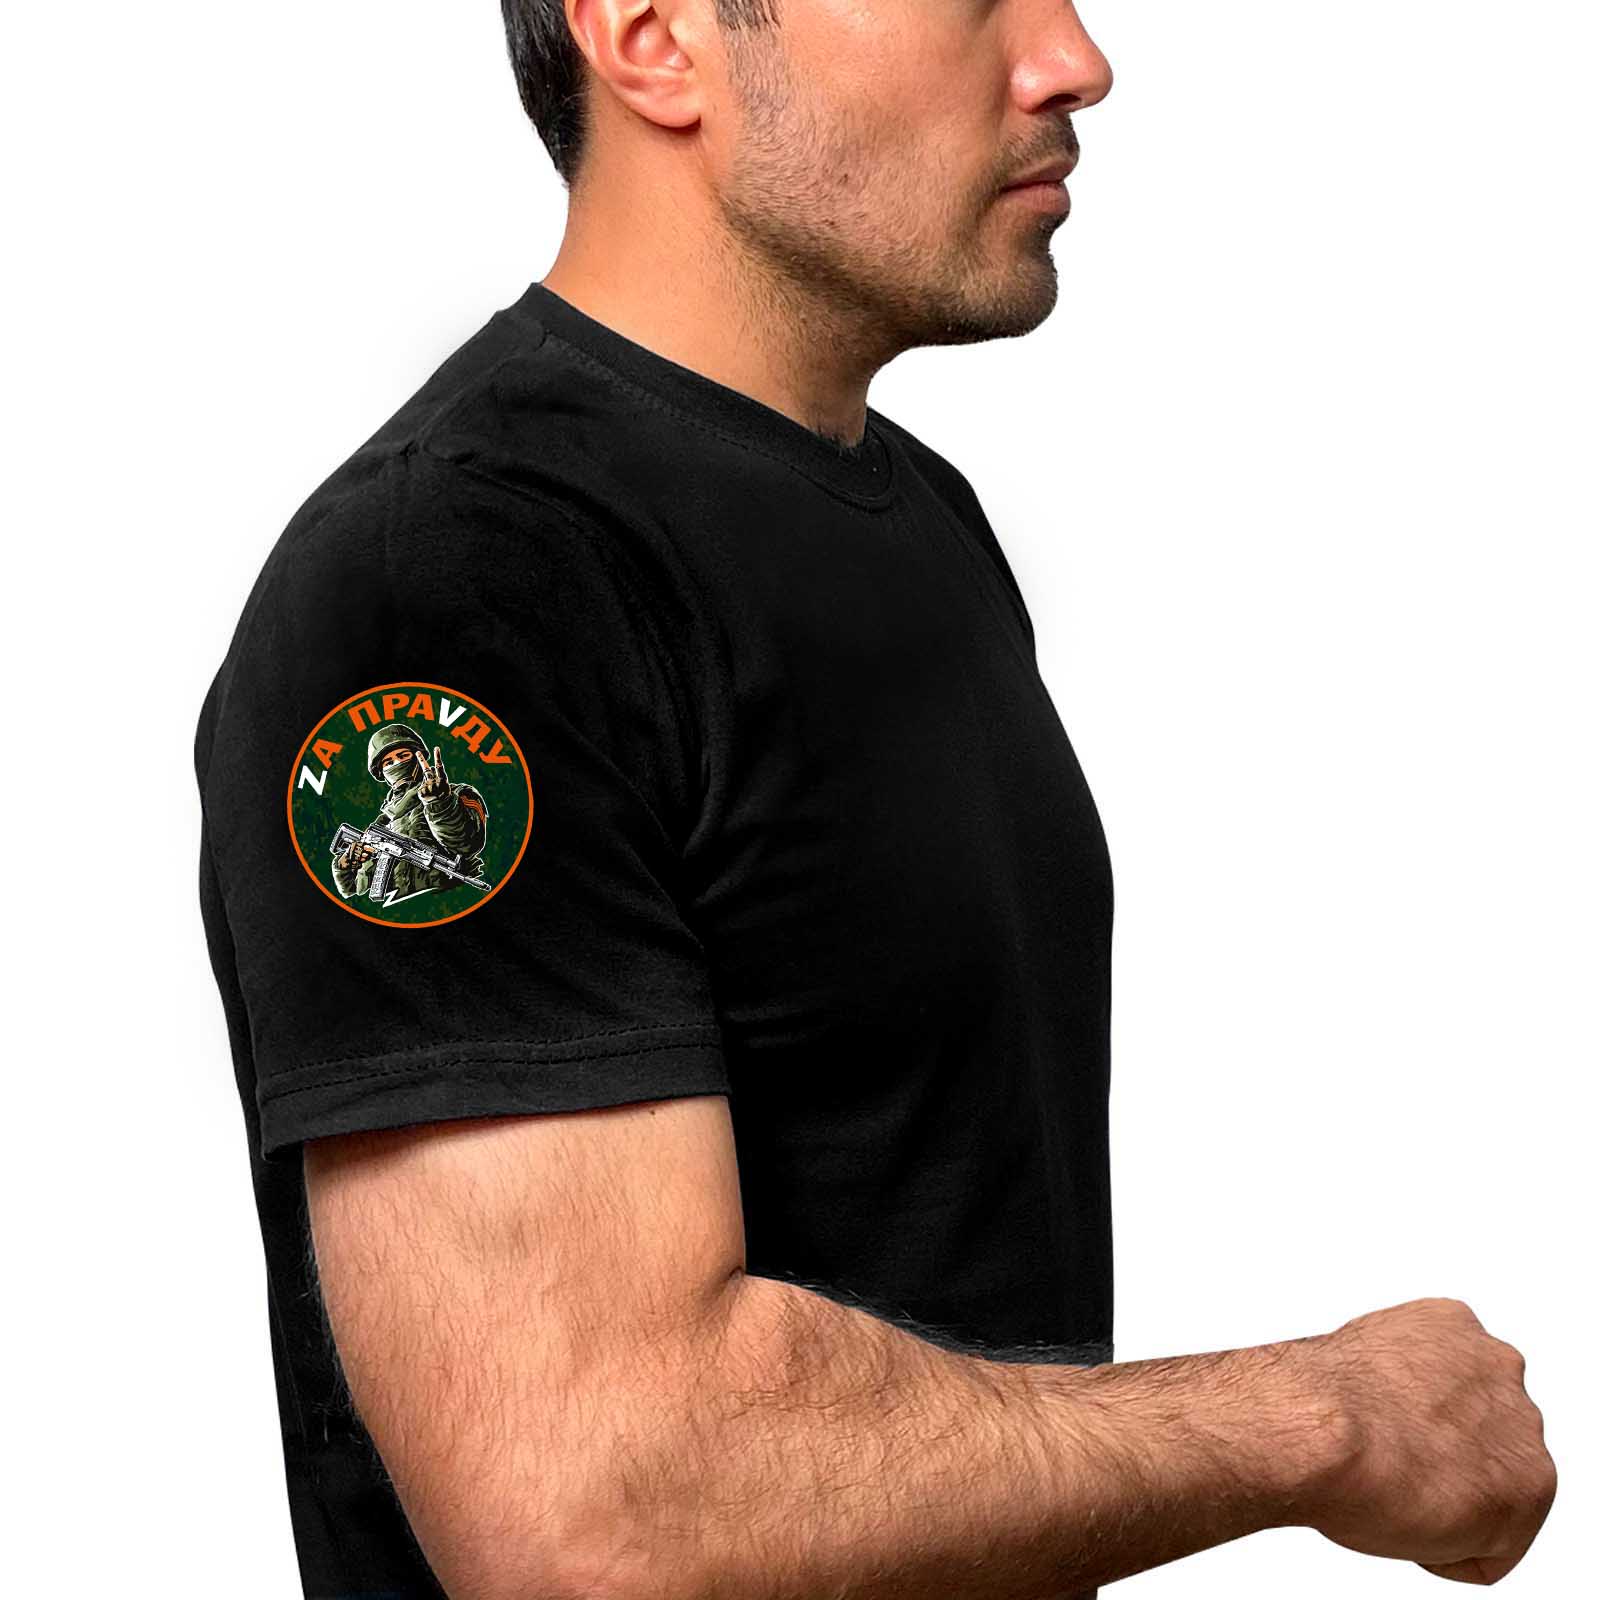 Чёрная футболка с термоаппликацией "Zа праVду" на рукаве